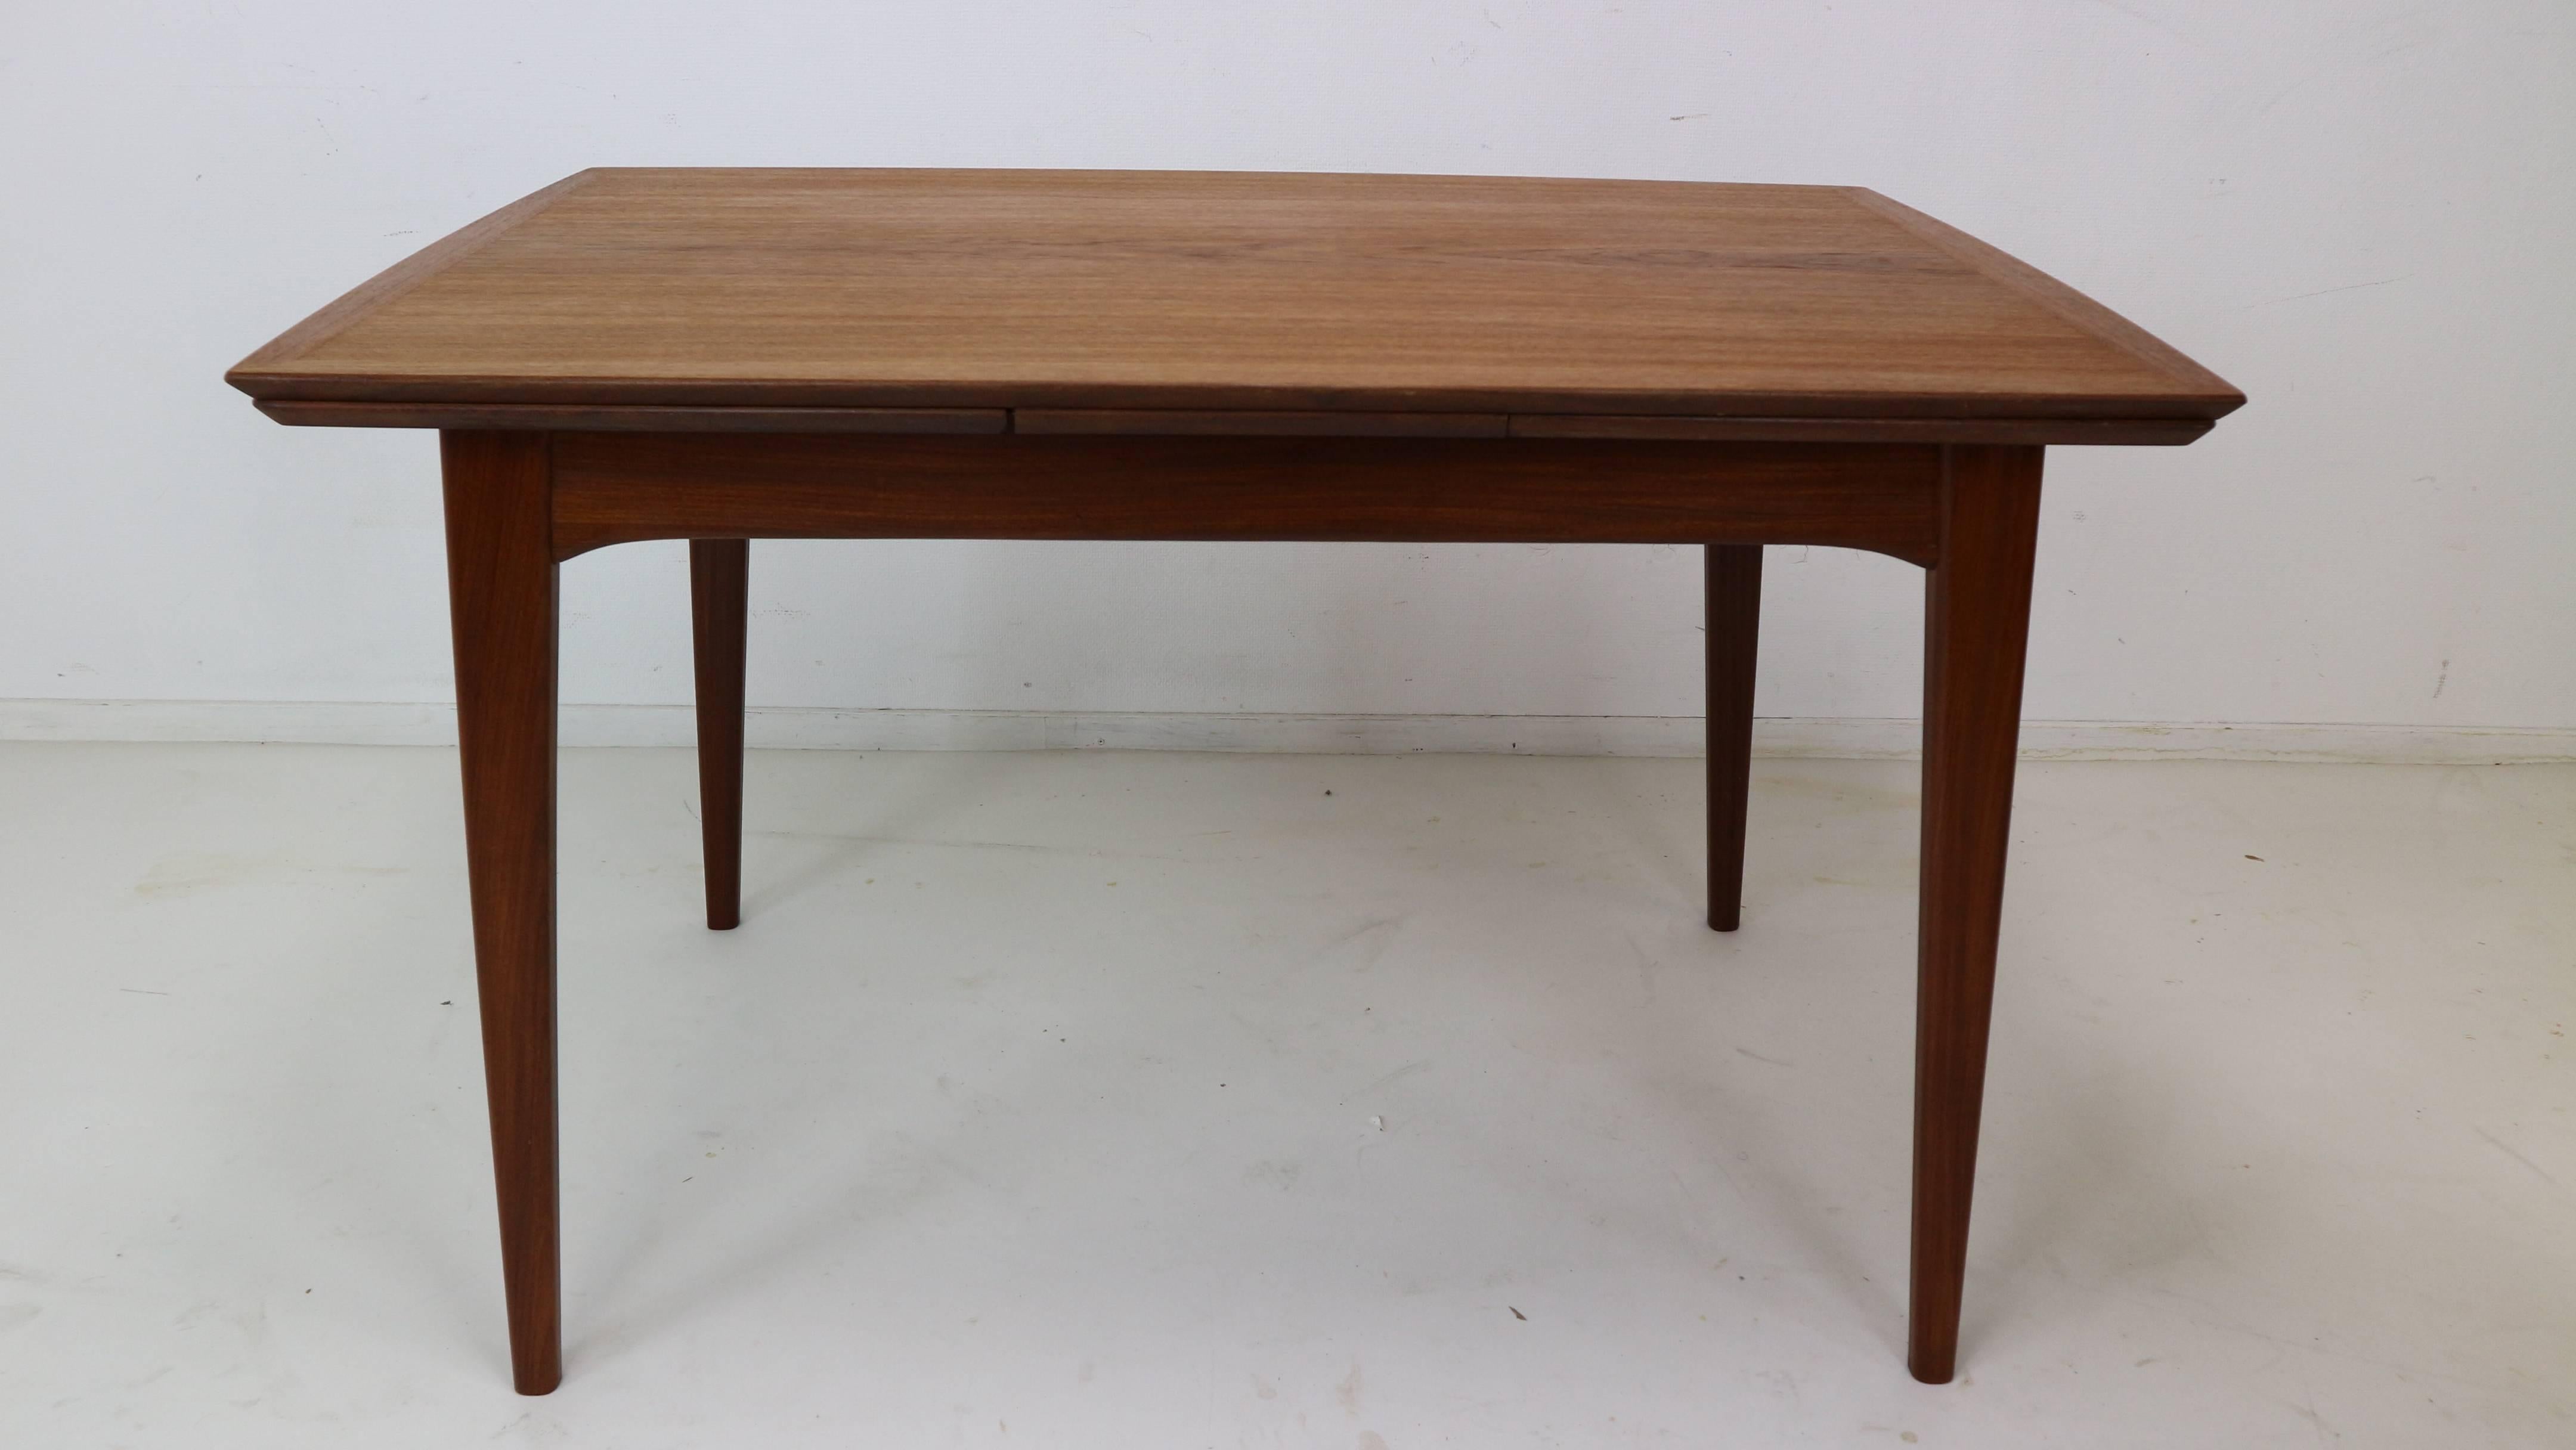 Dutch Mid-Century Modern extendable table by Louis Van Teeffelen for Webe, 1960s.

Solid teak legs with teak veneer refurbished top. Beautiful grain on the top.

Extended the table is 206cm / 81.1 inch.